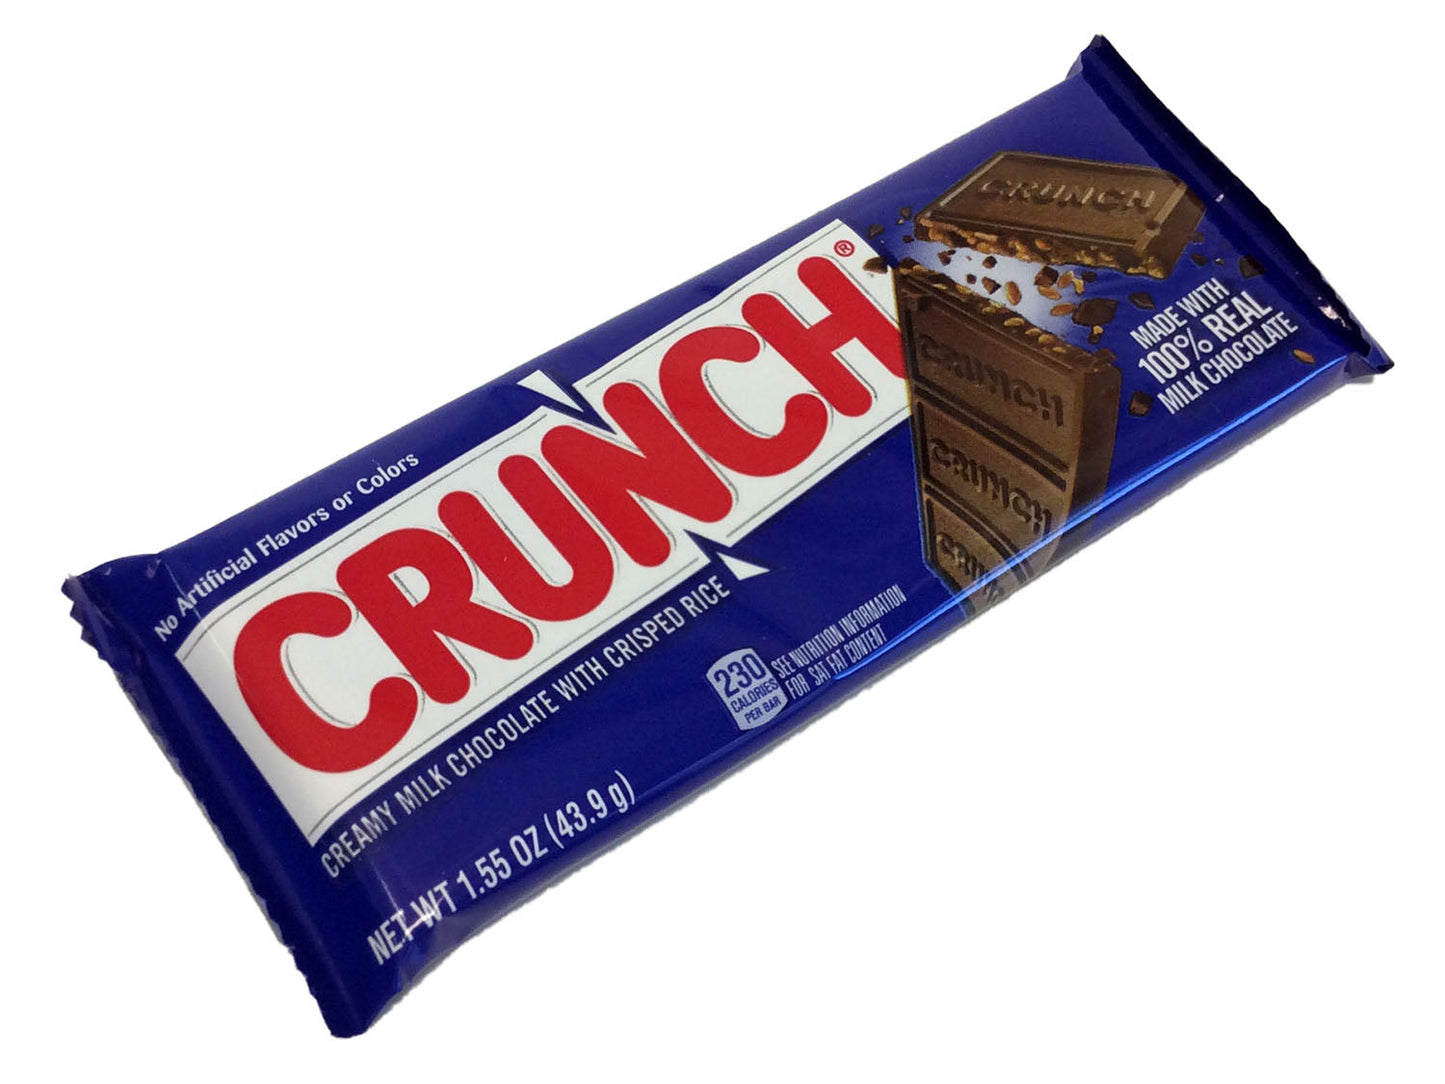 crunch candy bar wrapper